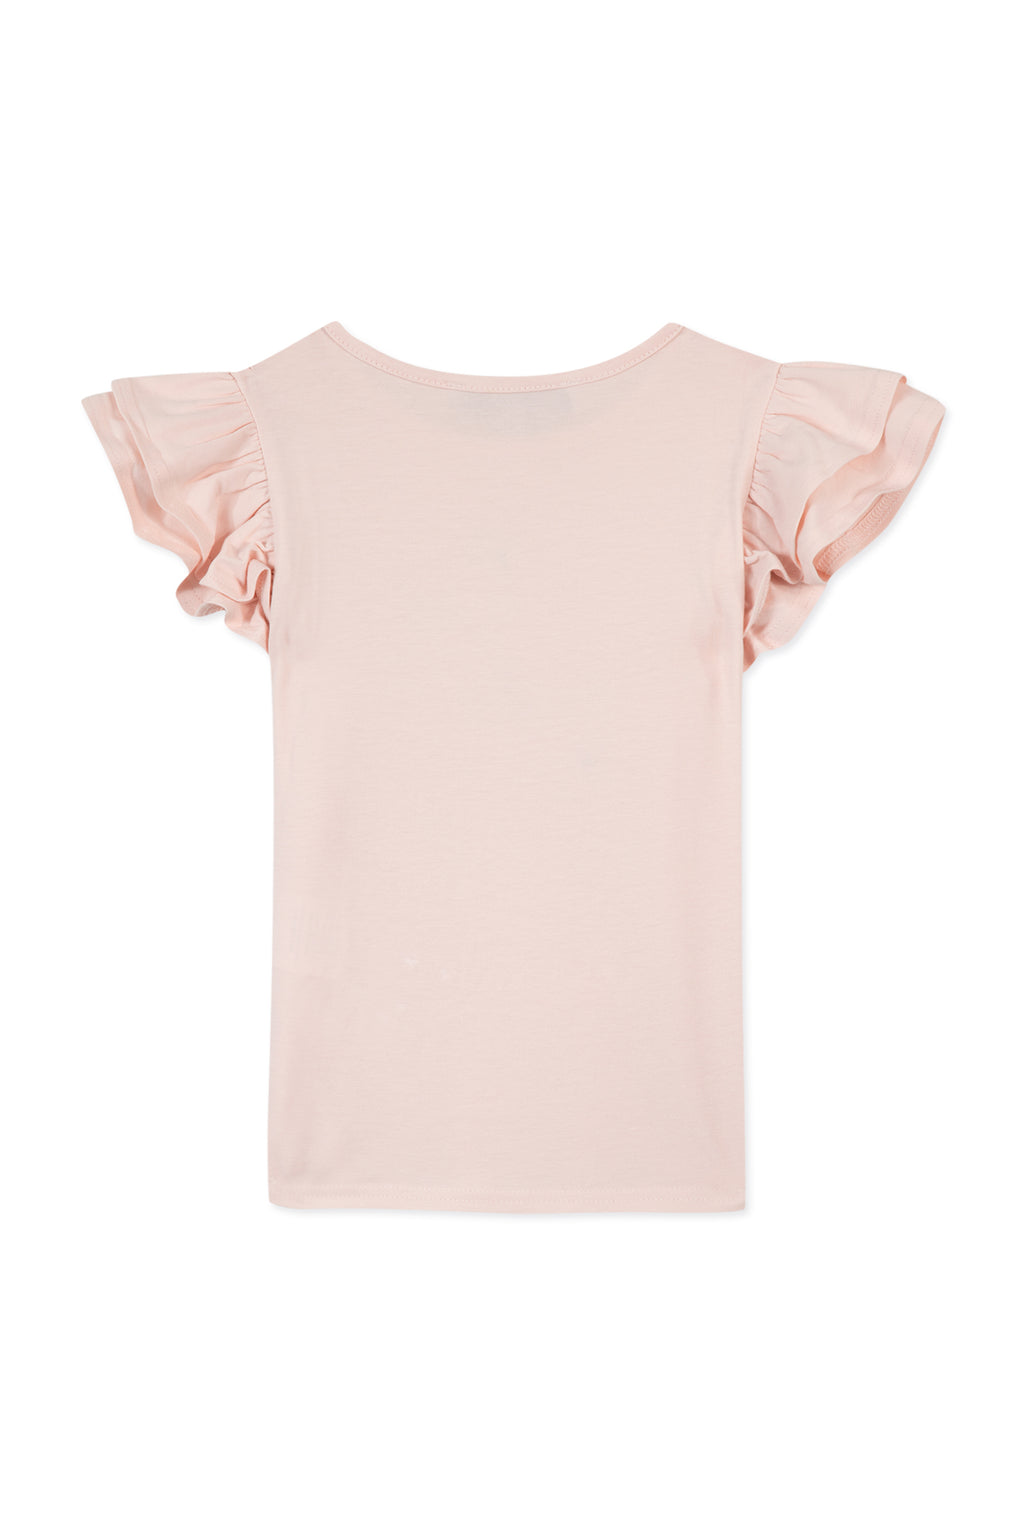 T-shirt - Rose pâle illustration fleurs